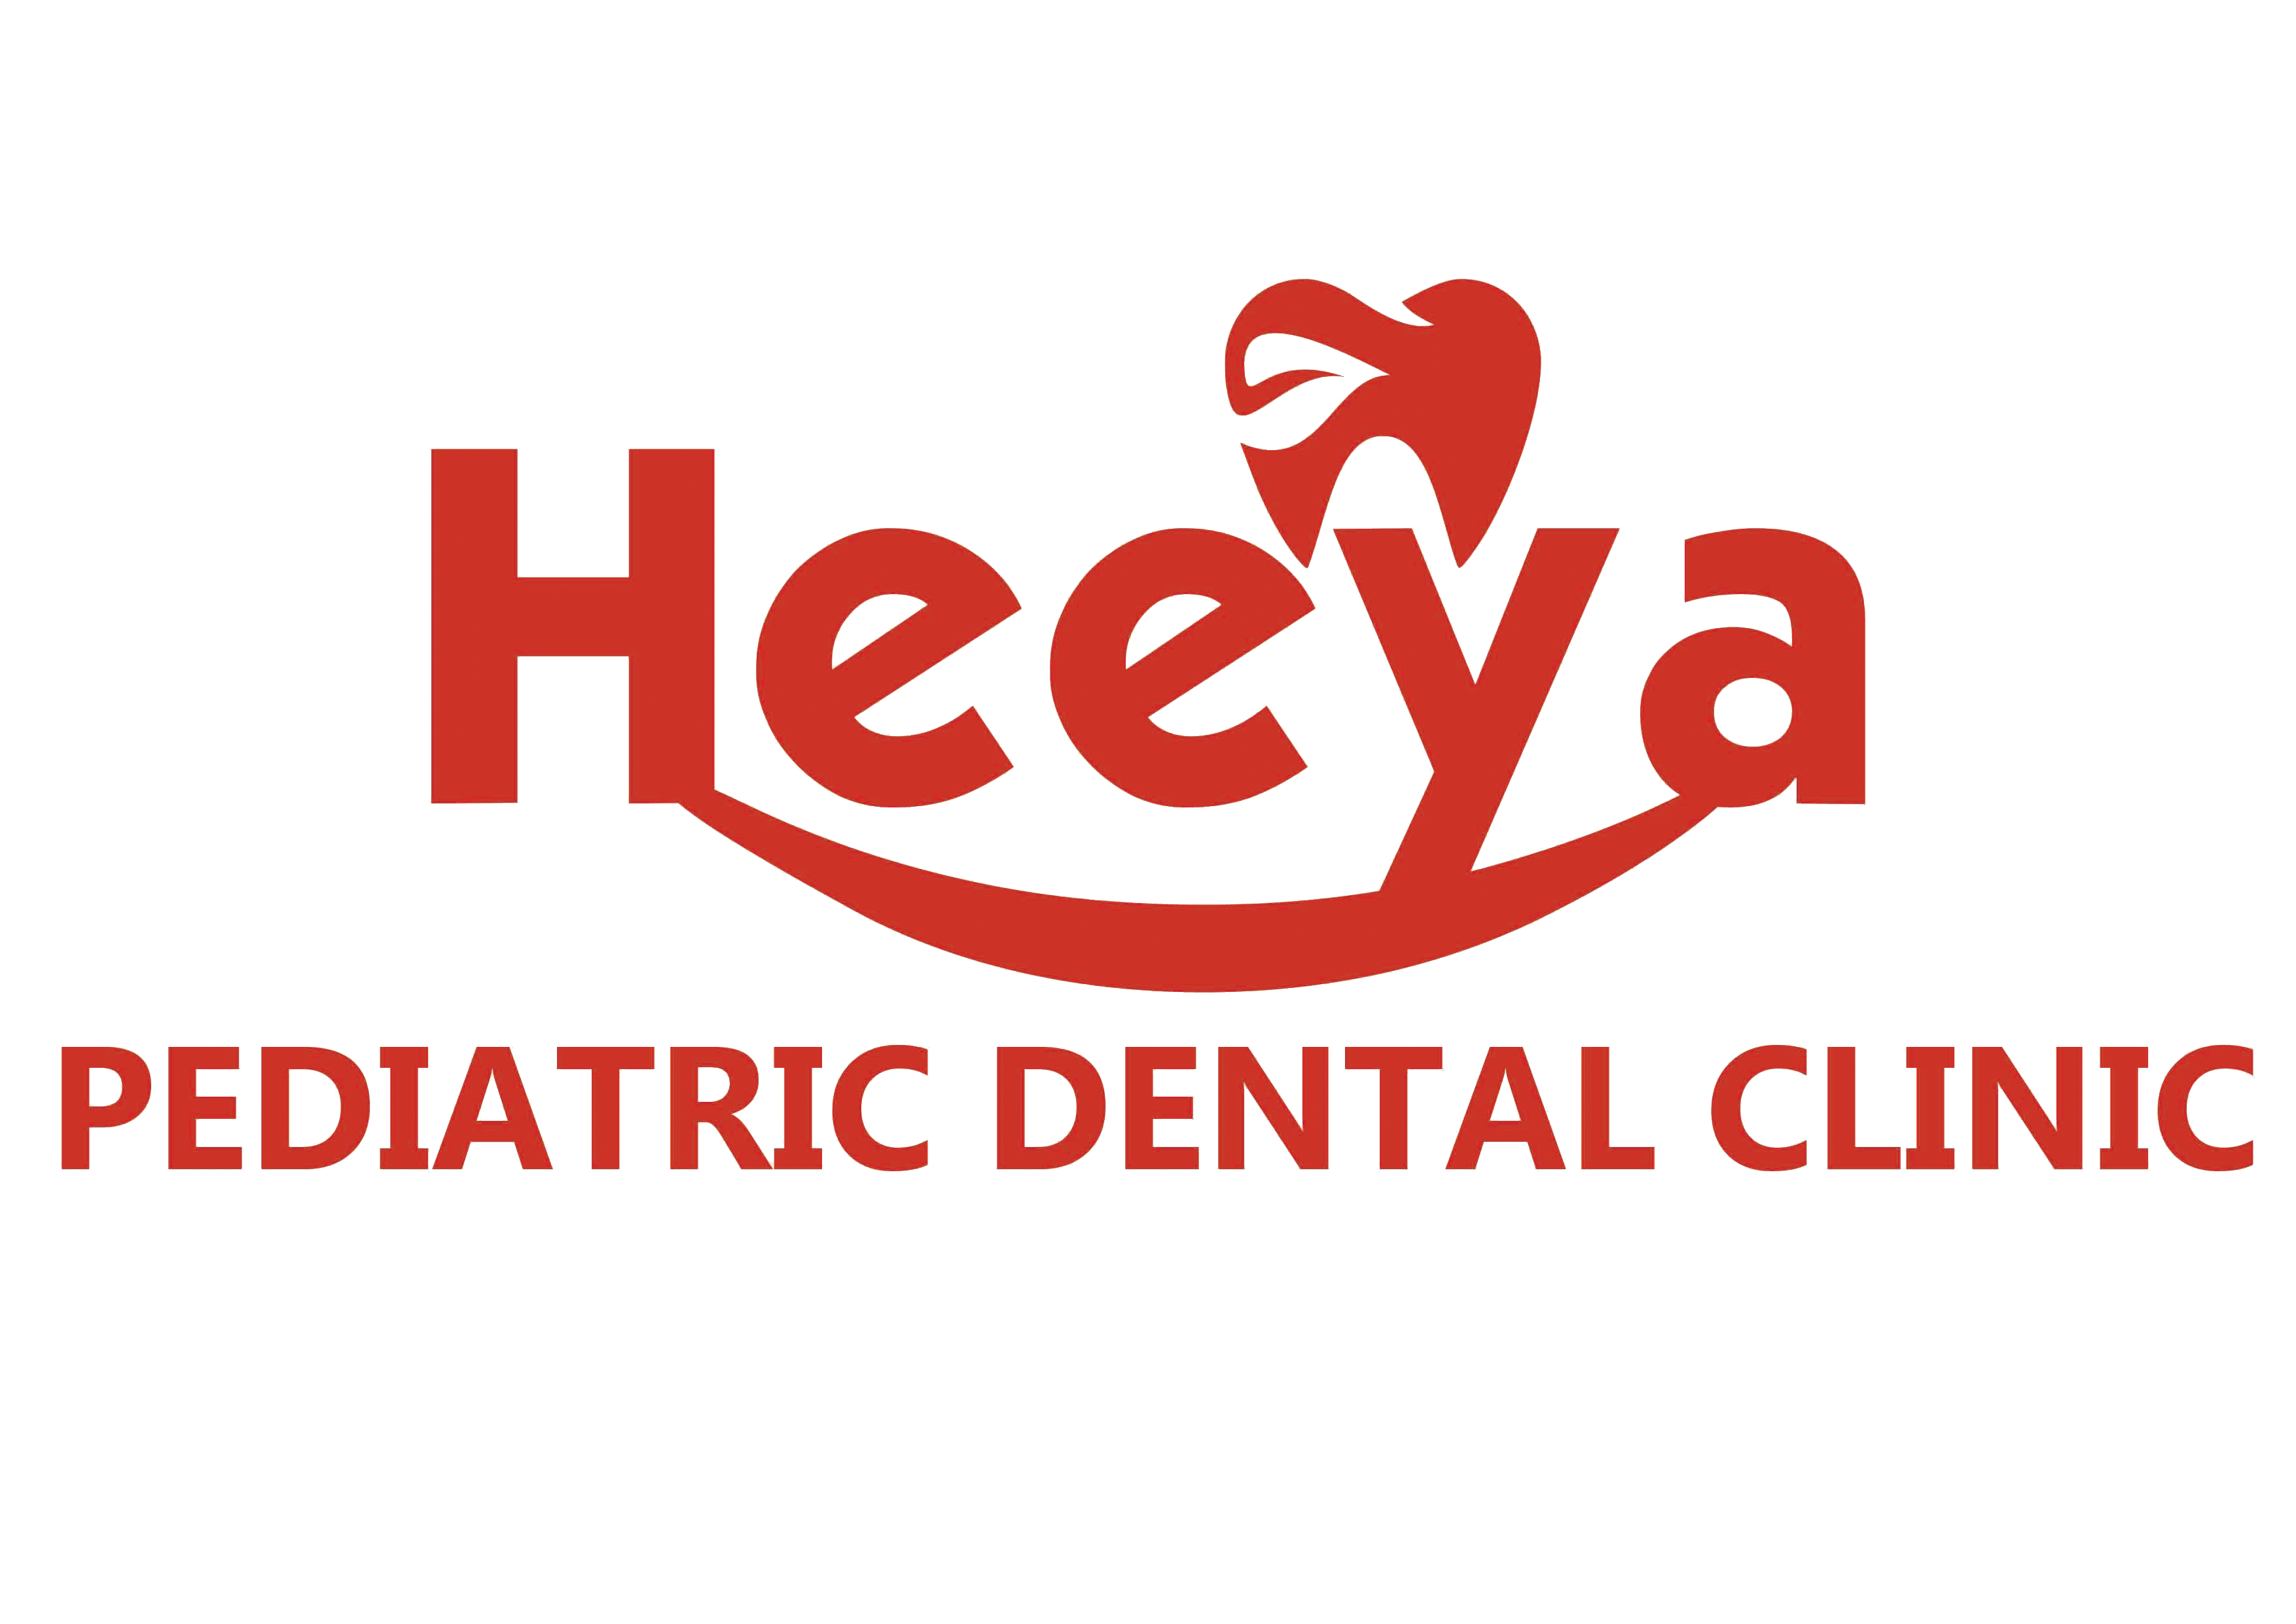 Heeya Pediatric Dental Clinic|Clinics|Medical Services